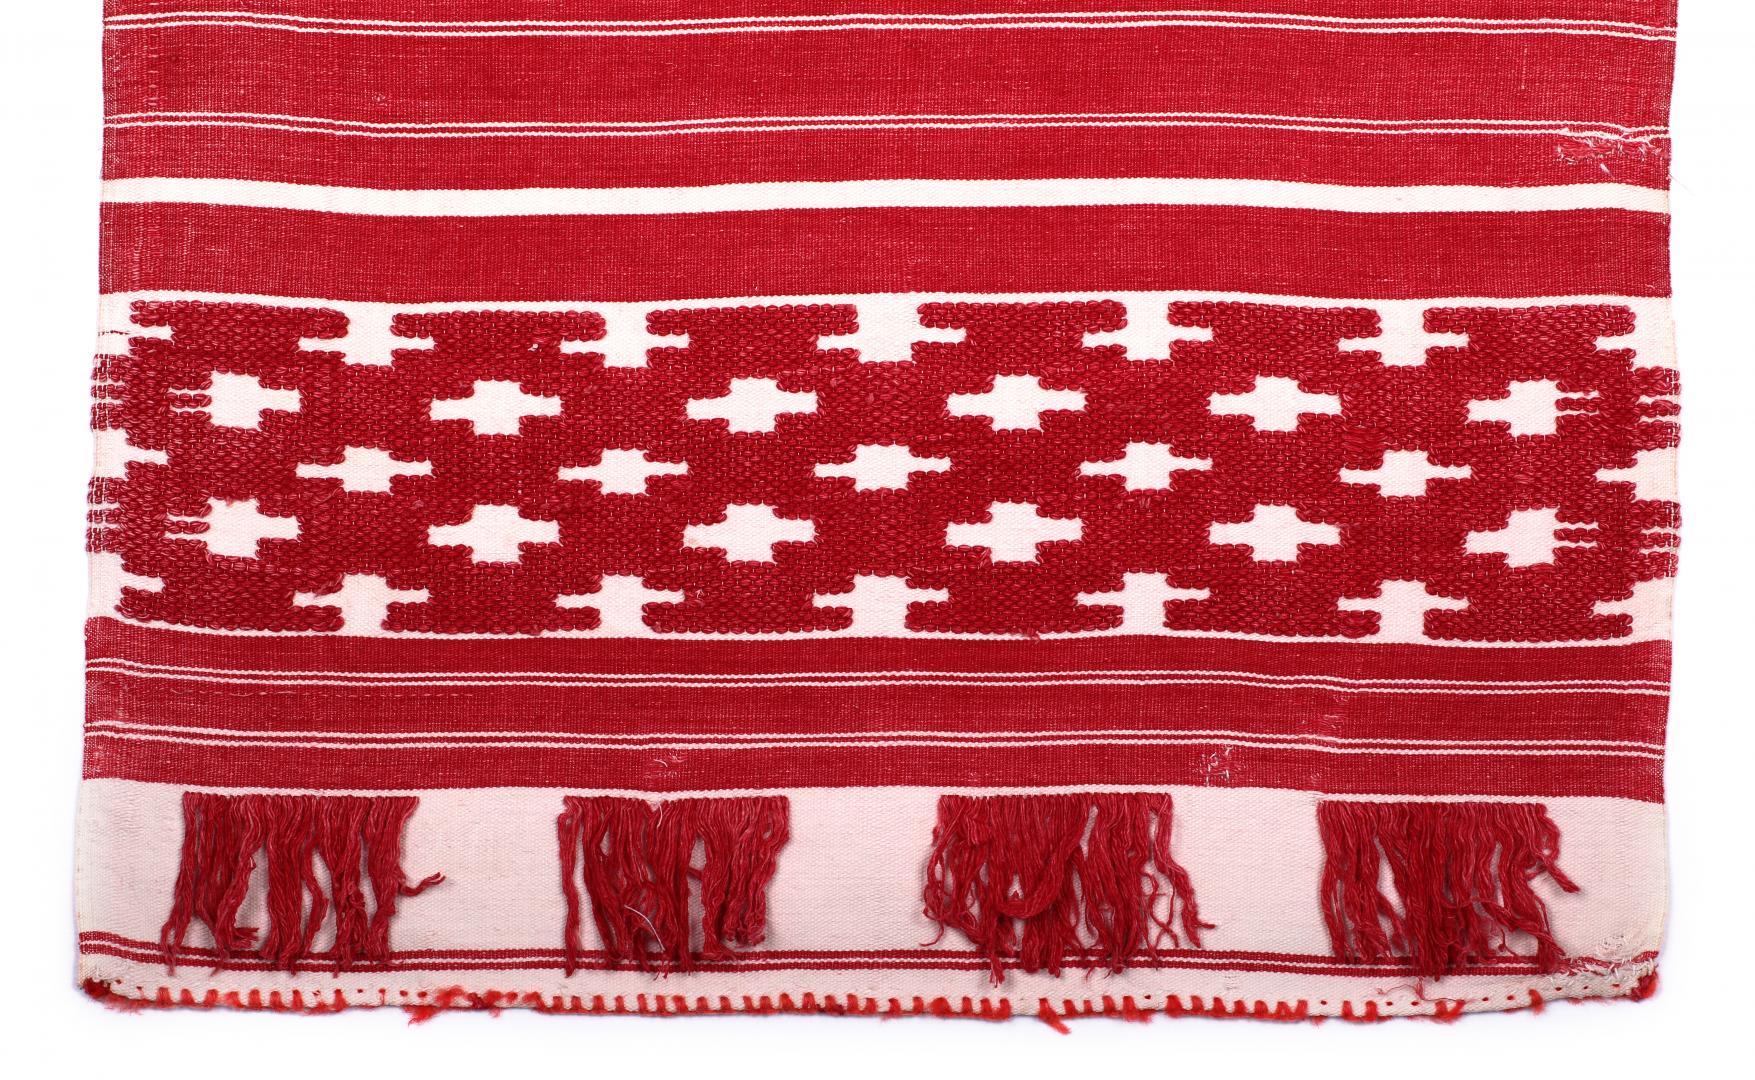 Woven rushnyk (towel) from Krolevets